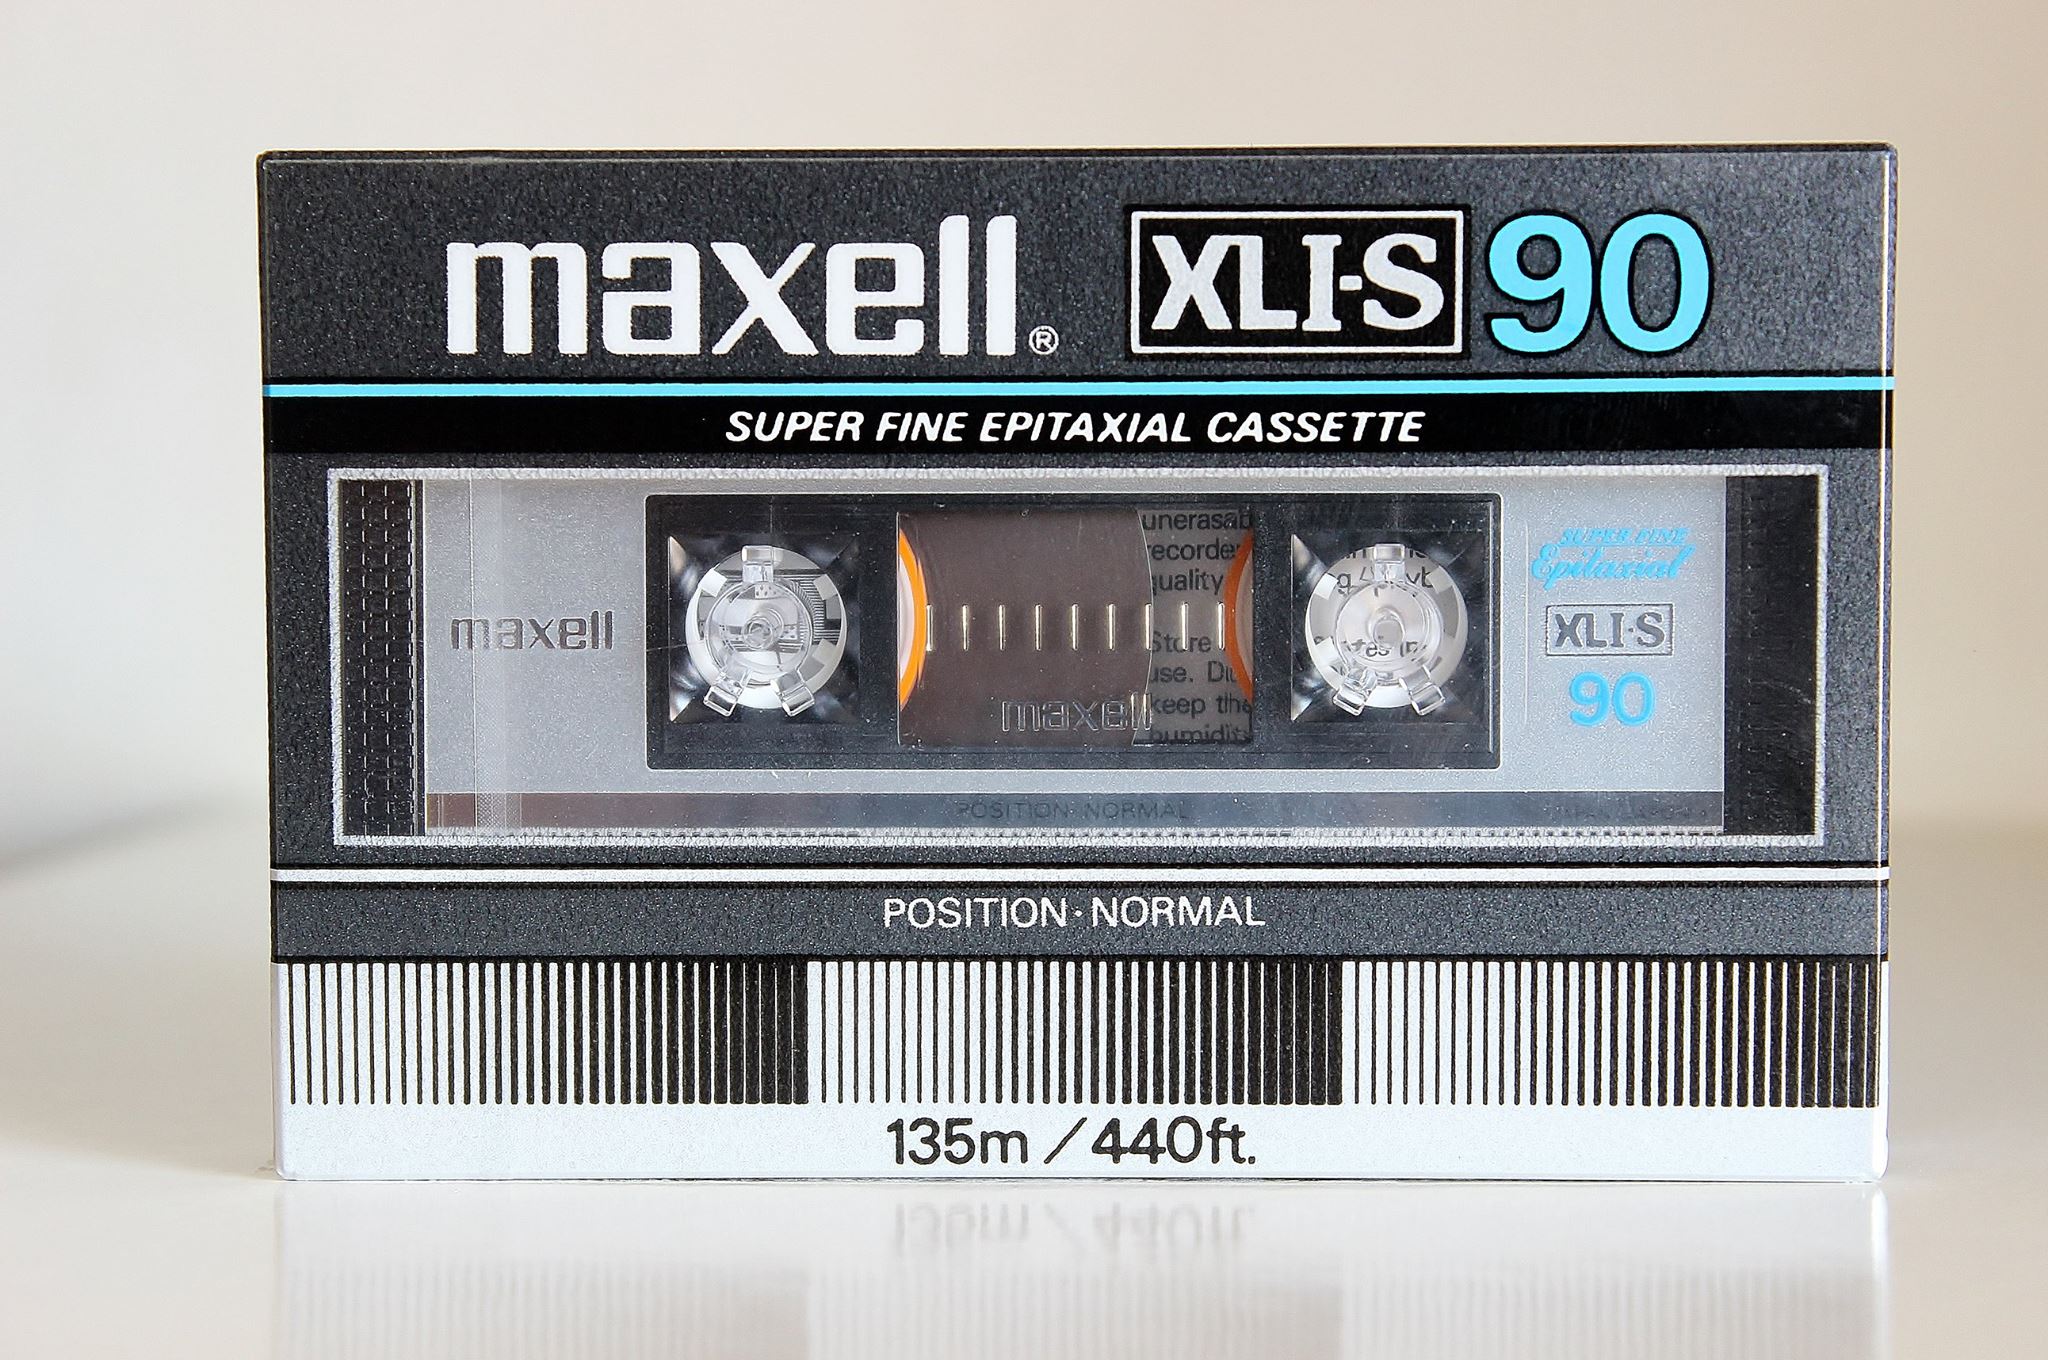 Maxell UD-XLI C-90, 1983 version.